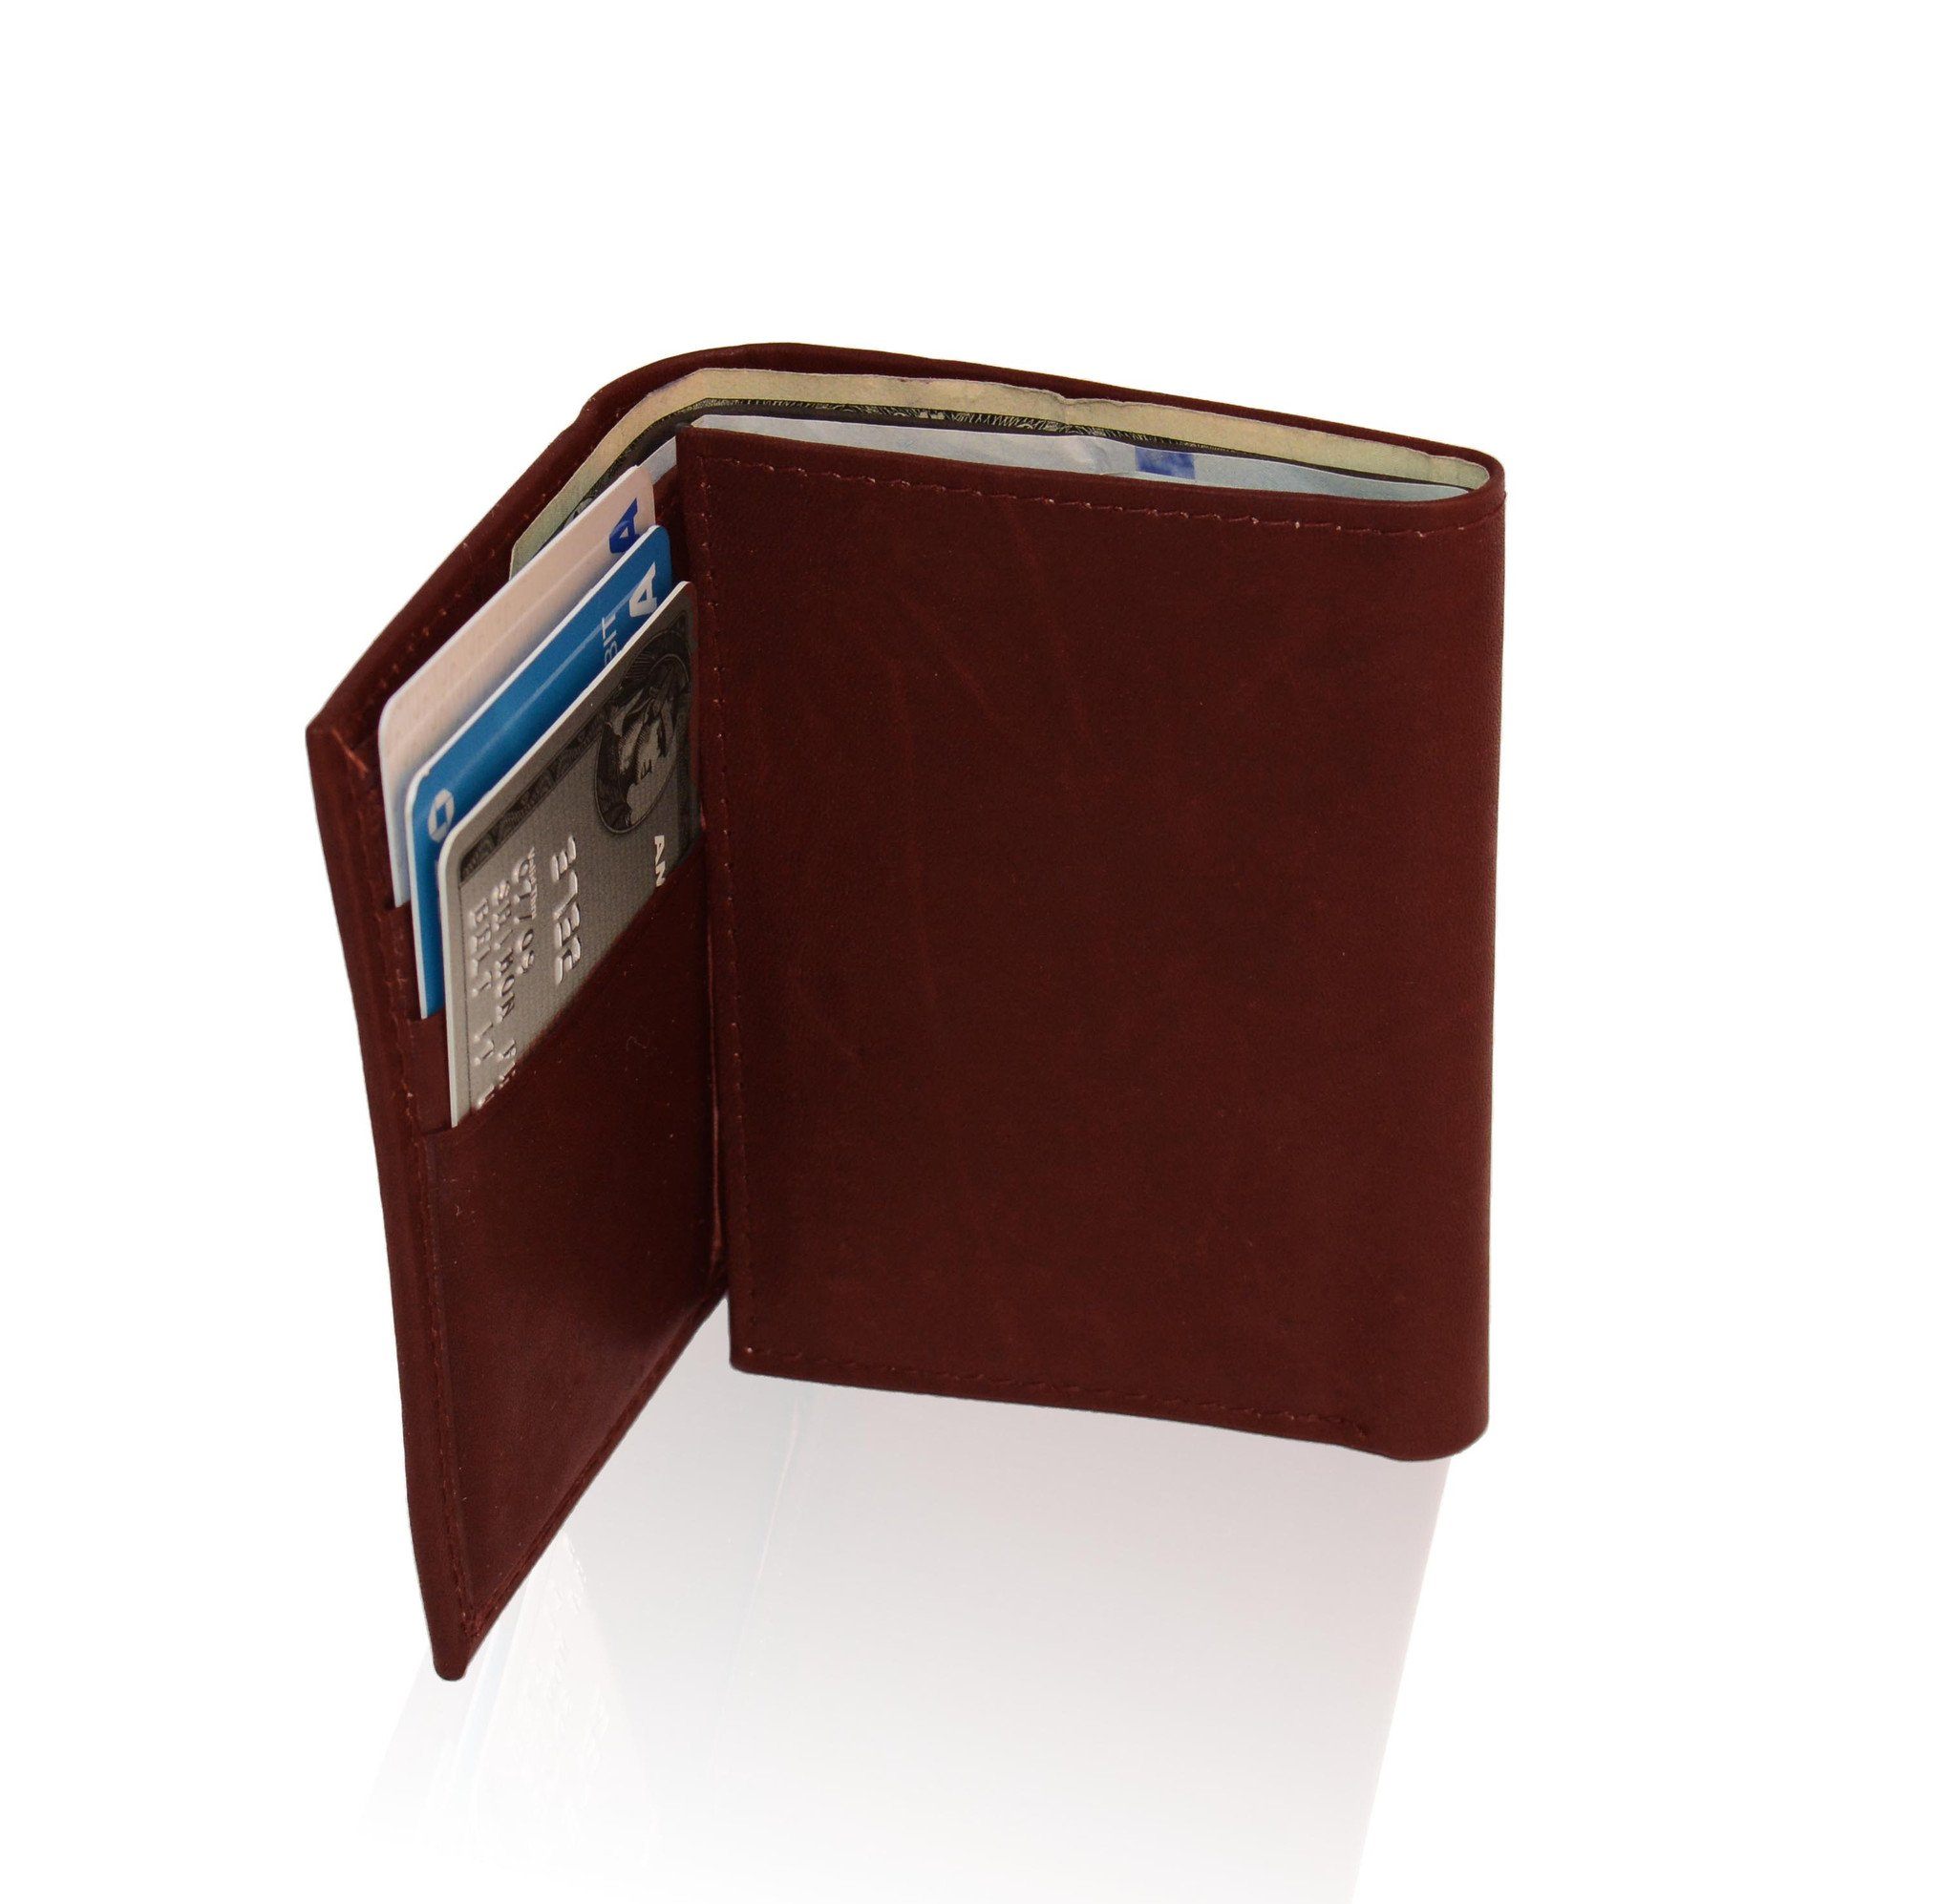 Genuine RFID-Blocking Best Genuine Leather Tri-fold Wallet For Men - Brown